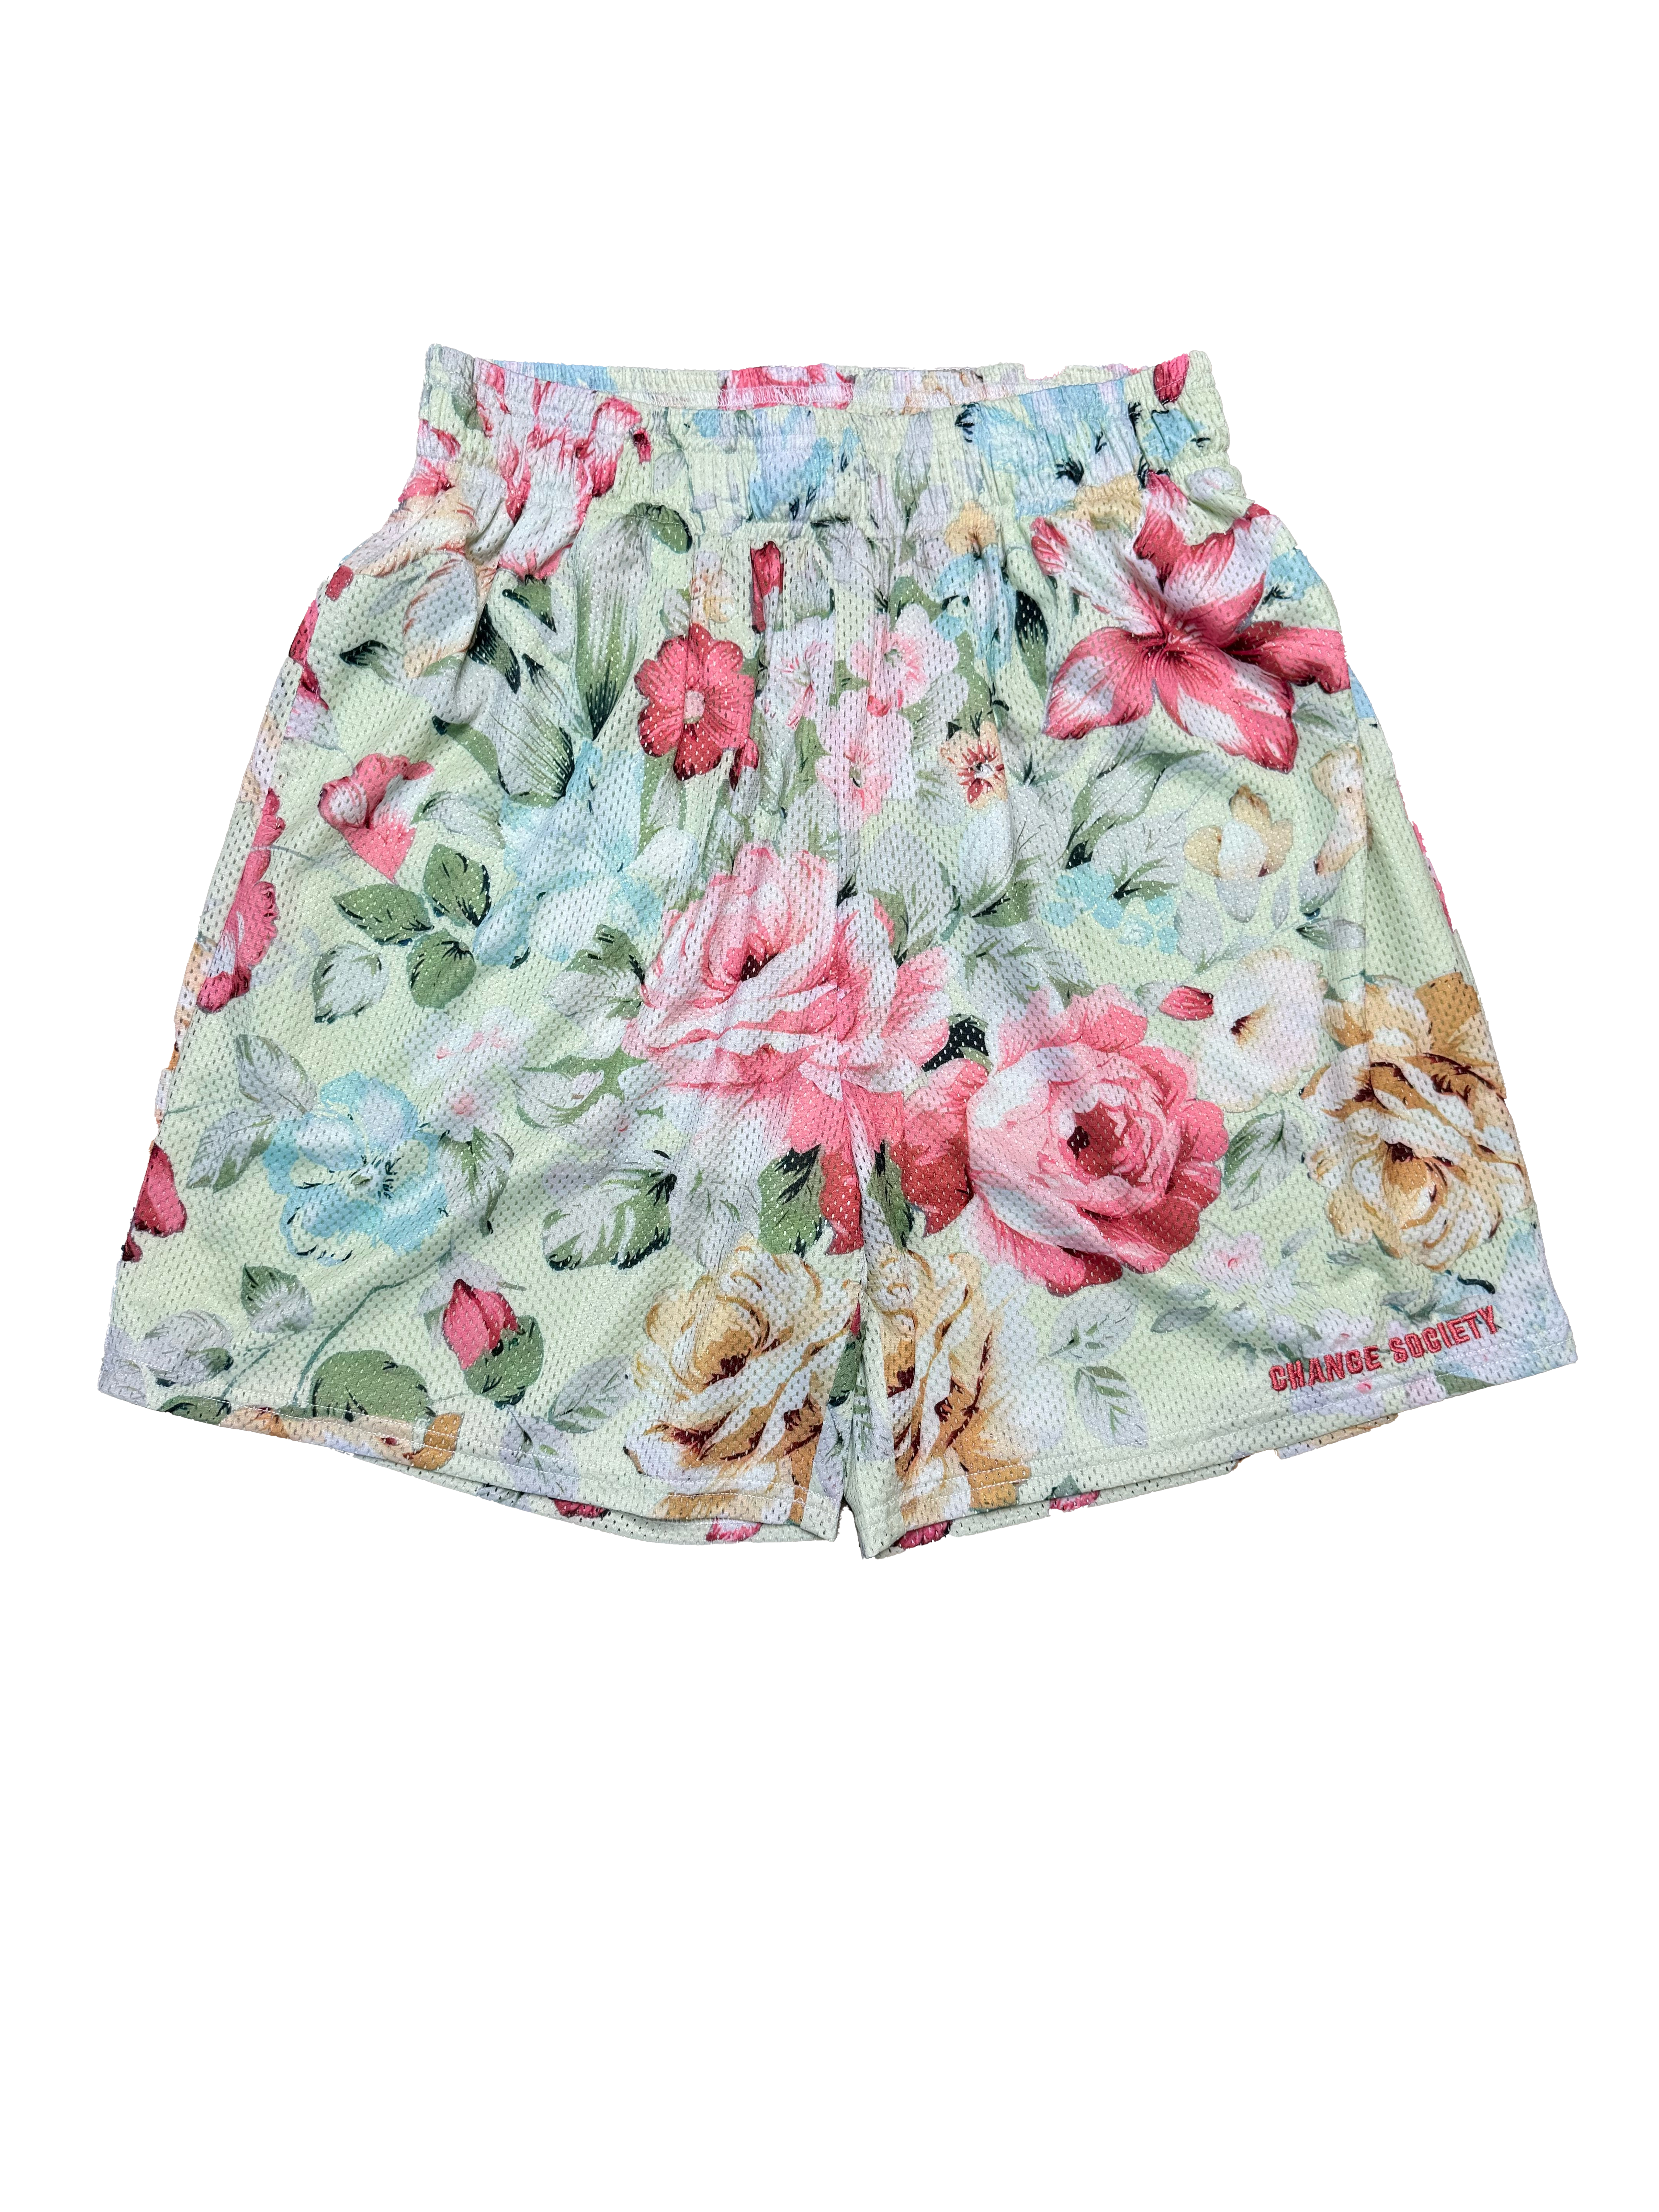 Change Society "Floral" Premium Mesh Shorts